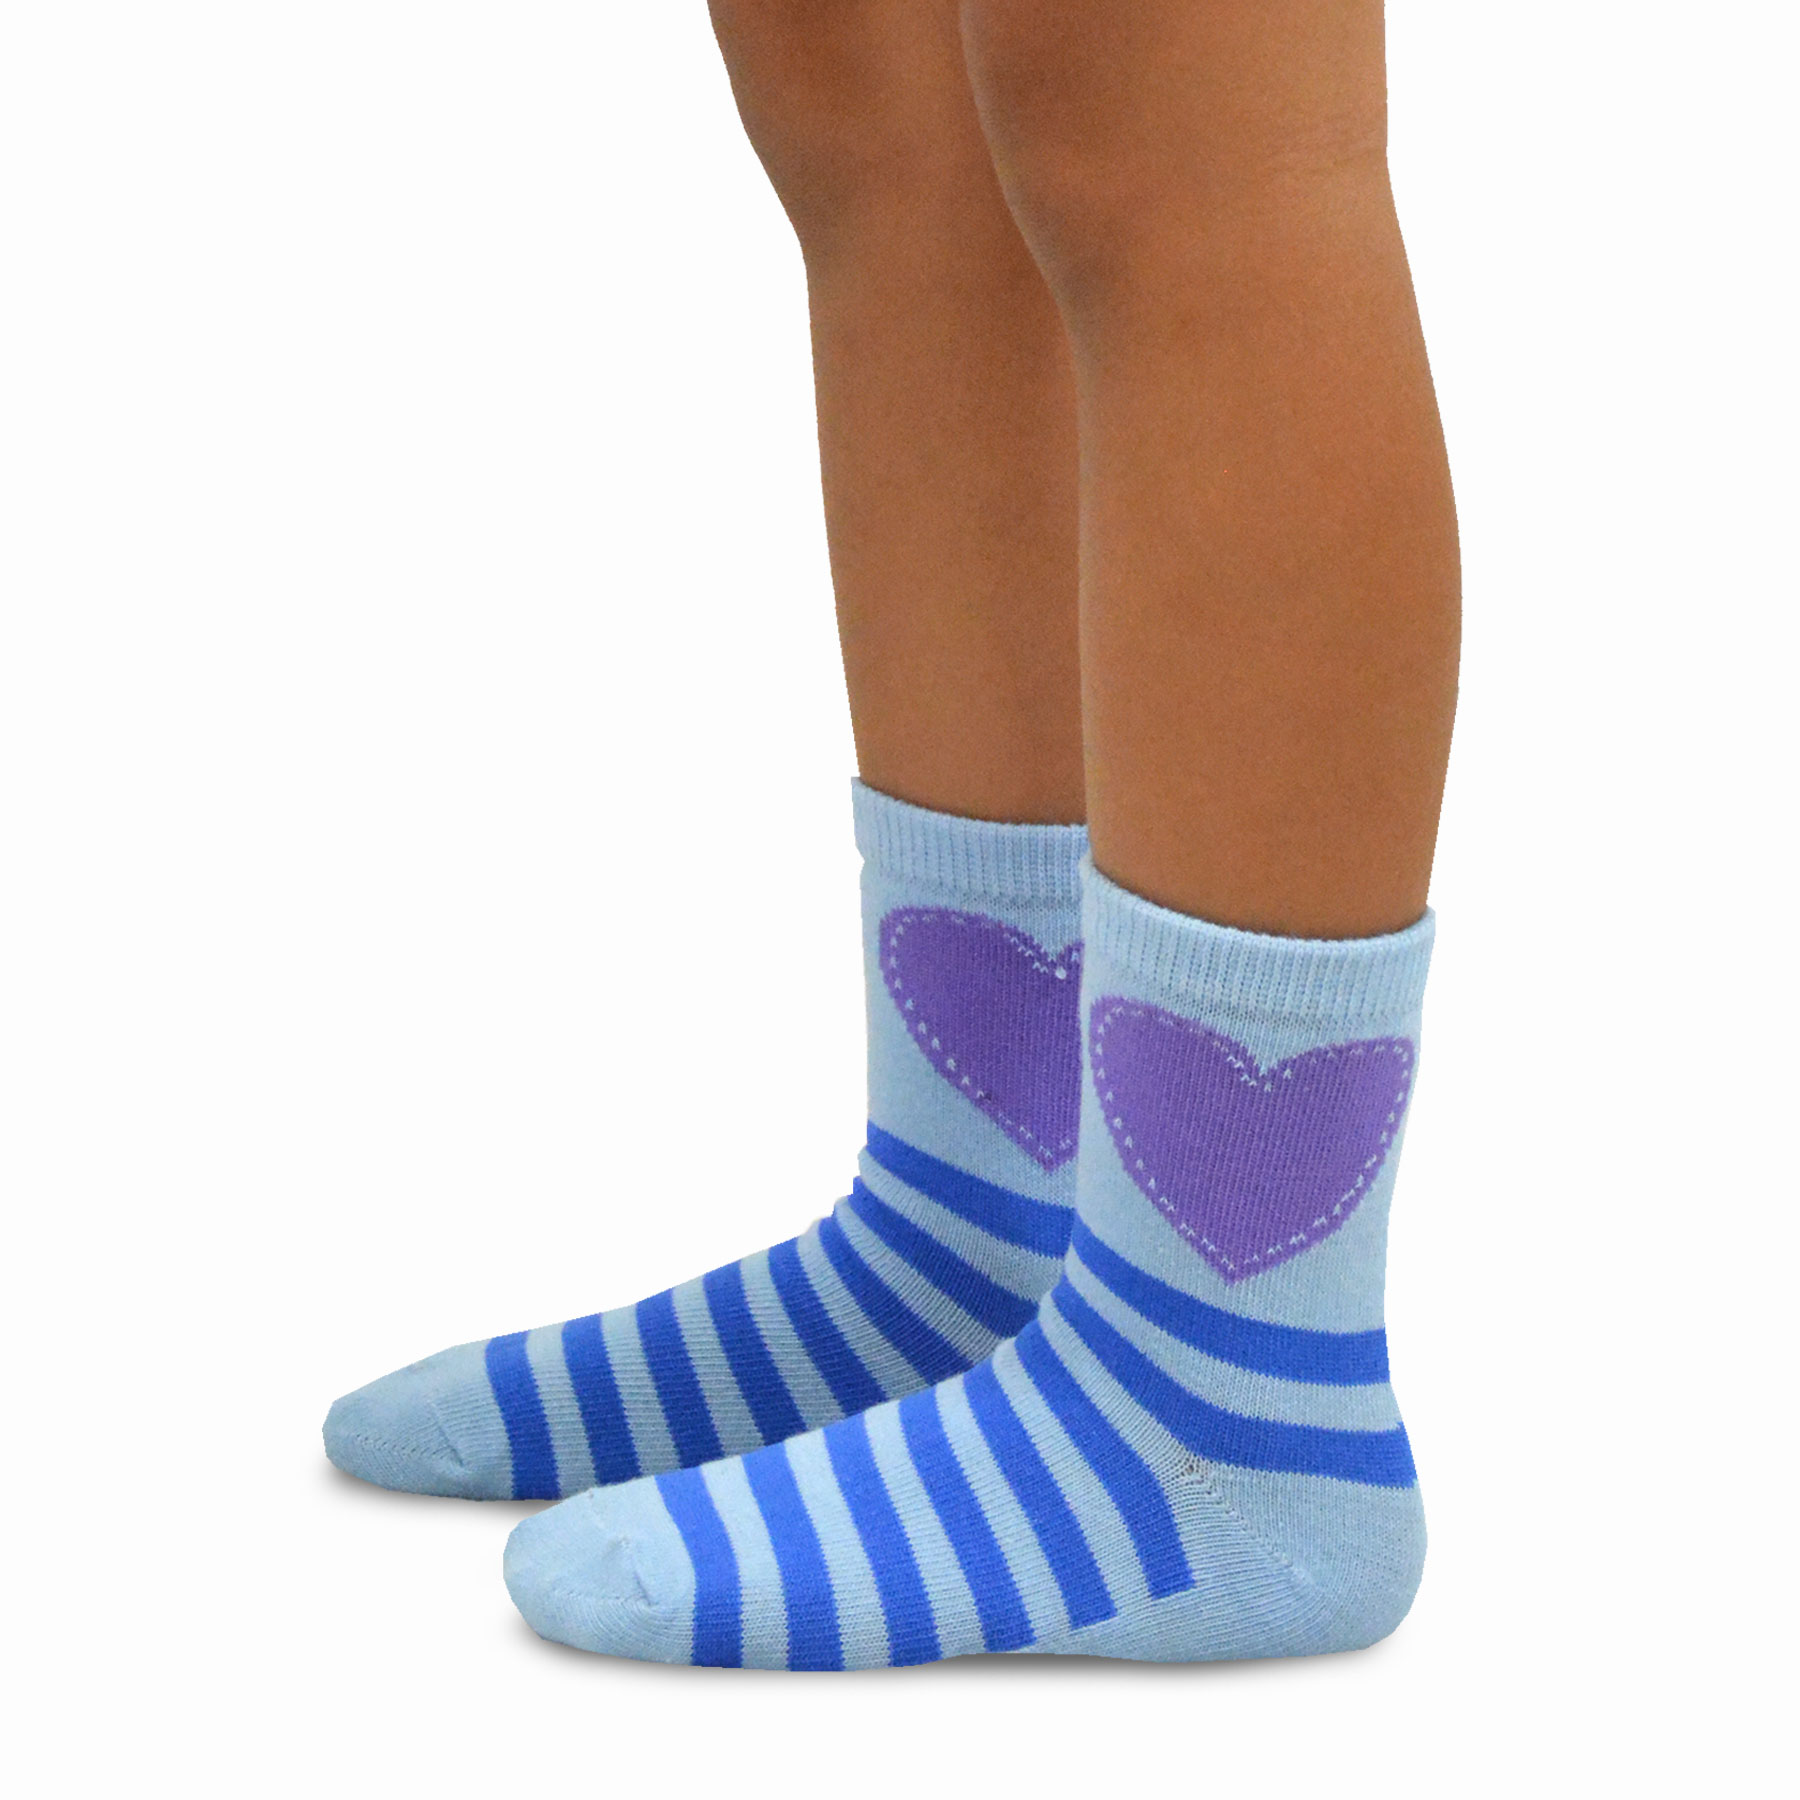 TeeHee Kids Cotton Fashion Crew Socks 6 Pair Pack for Girls - image 3 of 7